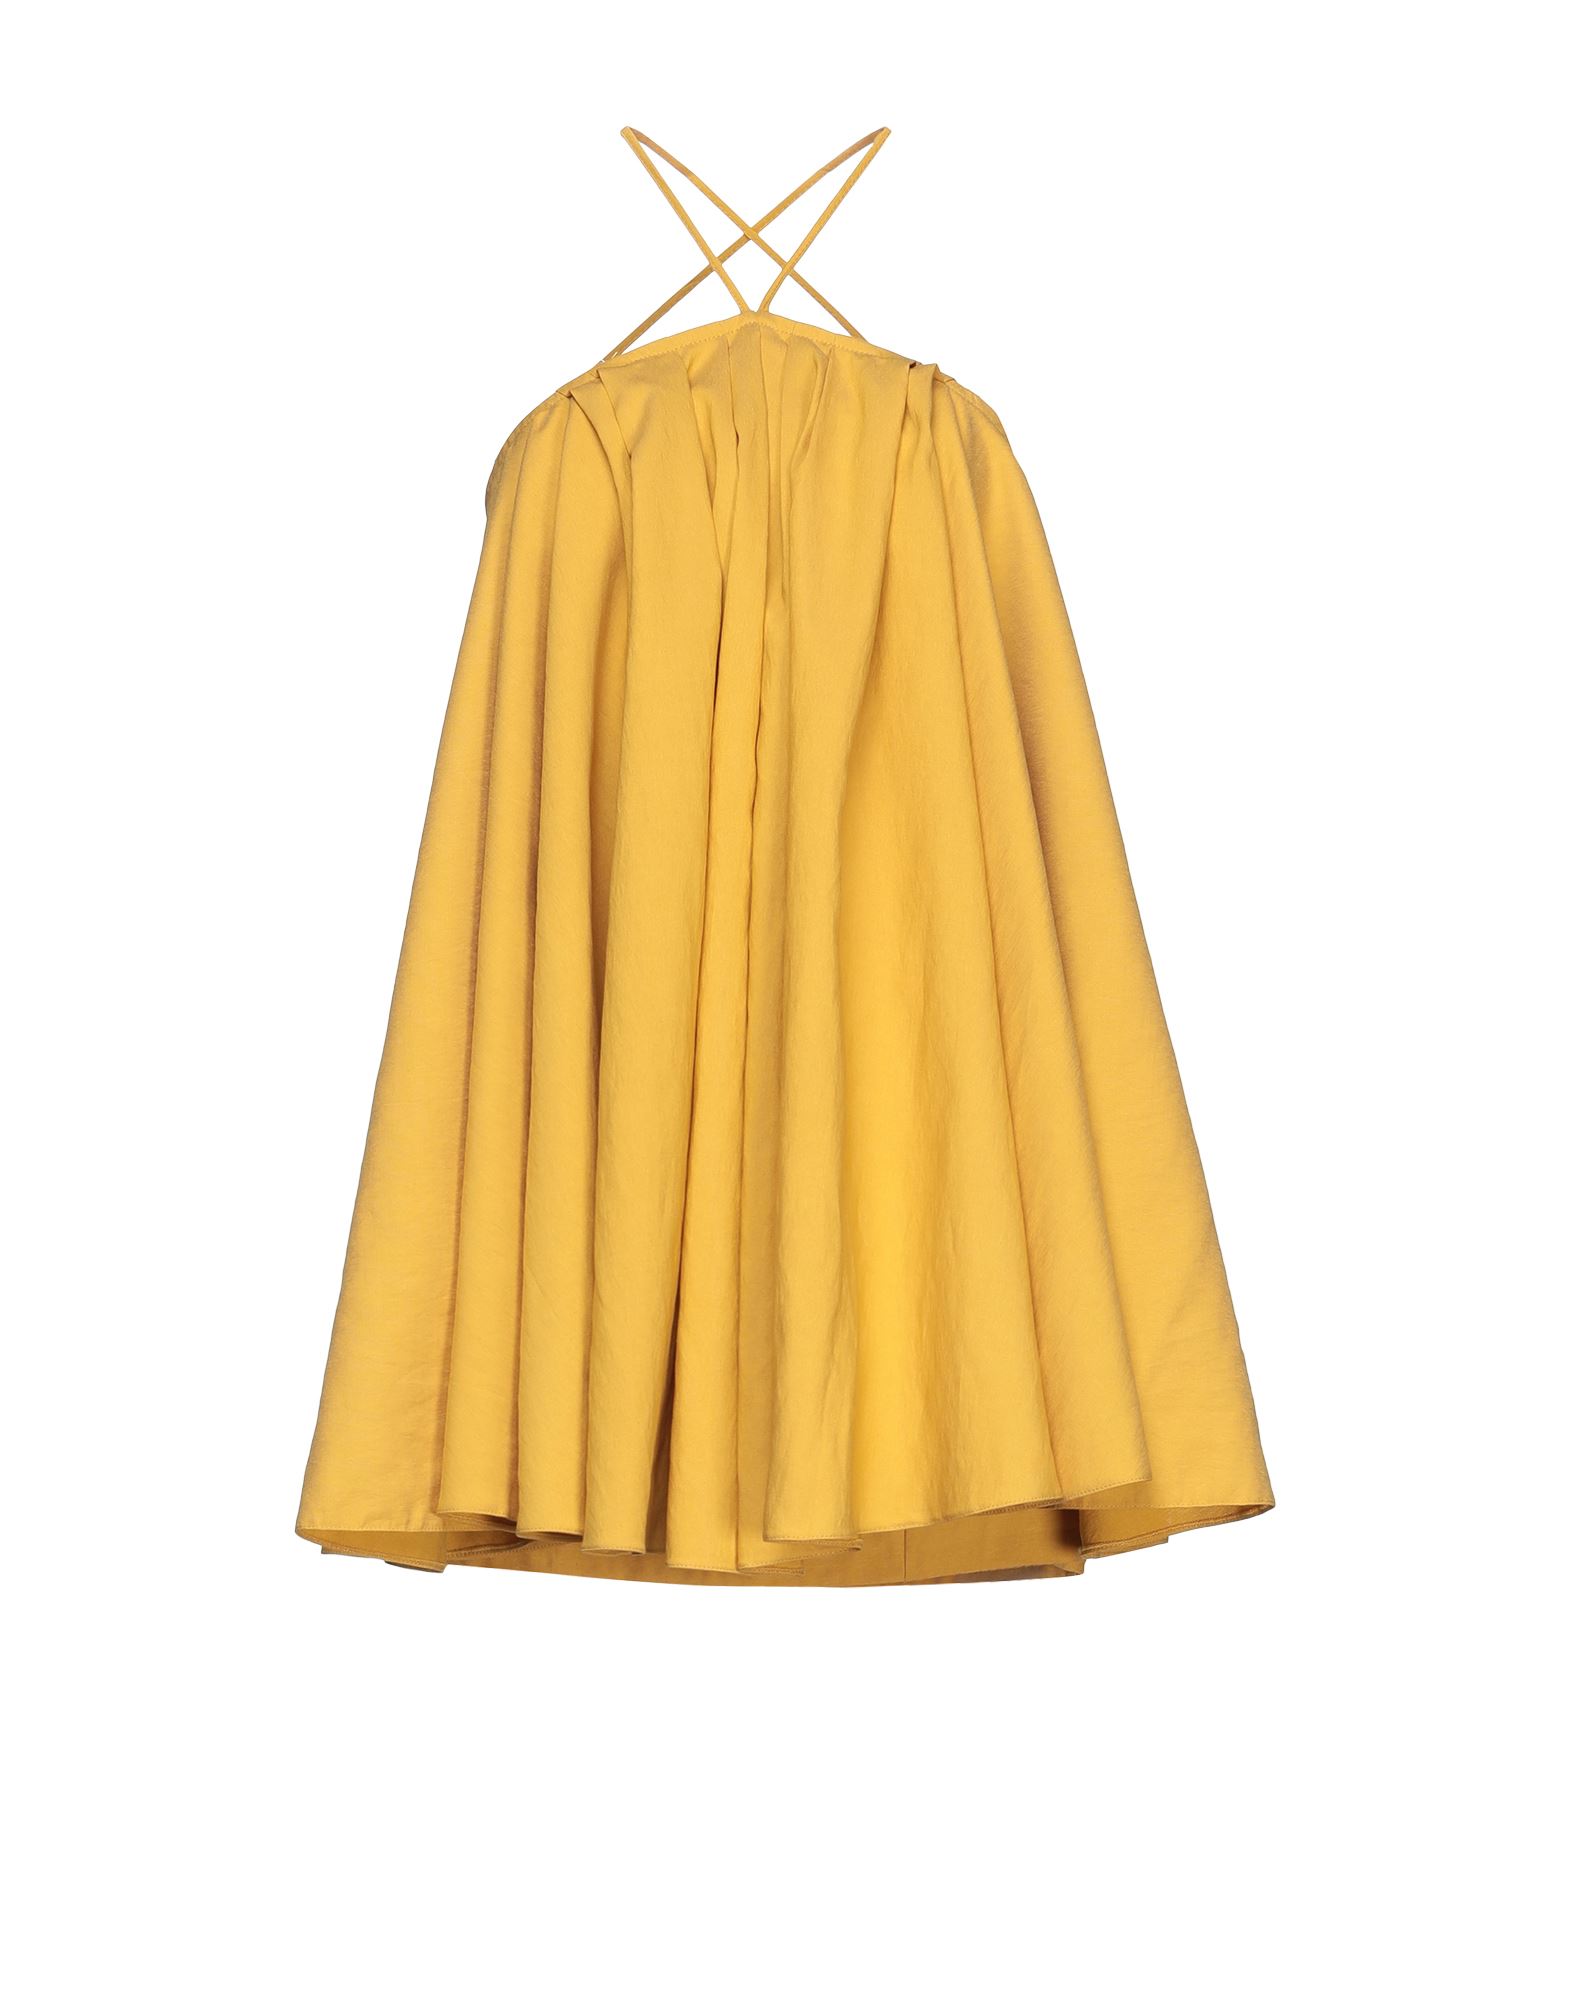 Actualee Short Dresses In Yellow